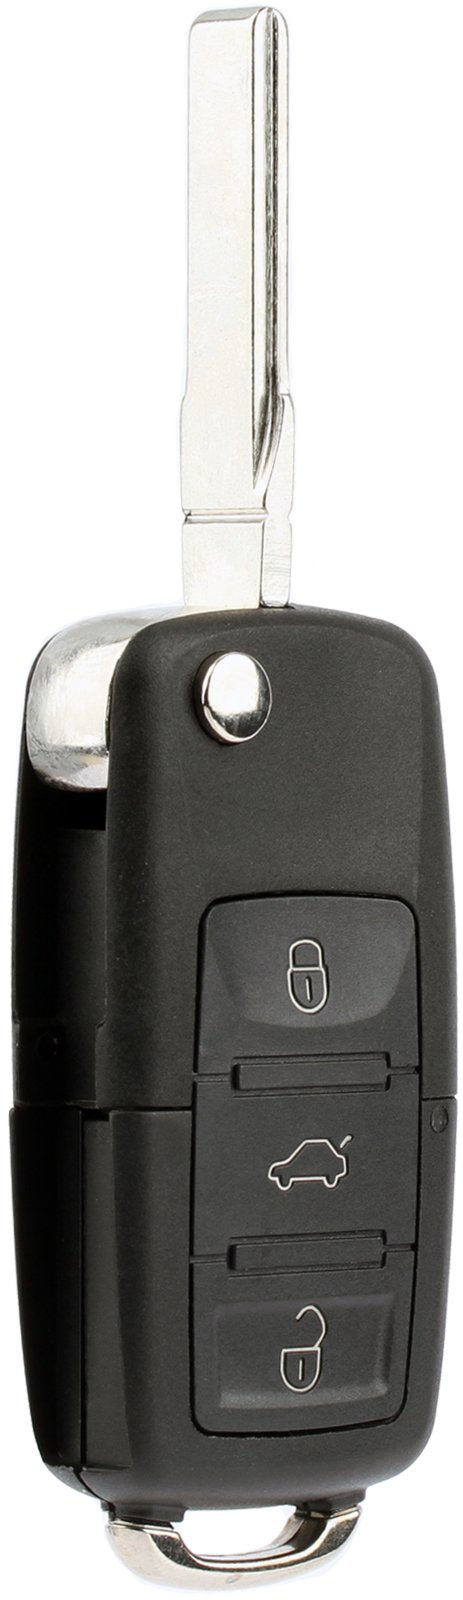  [AUSTRALIA] - KeylessOption Keyless Entry Remote Control Car Flip Key Fob Replacement for HLO1J0959753AM, HLO1J0959753DC